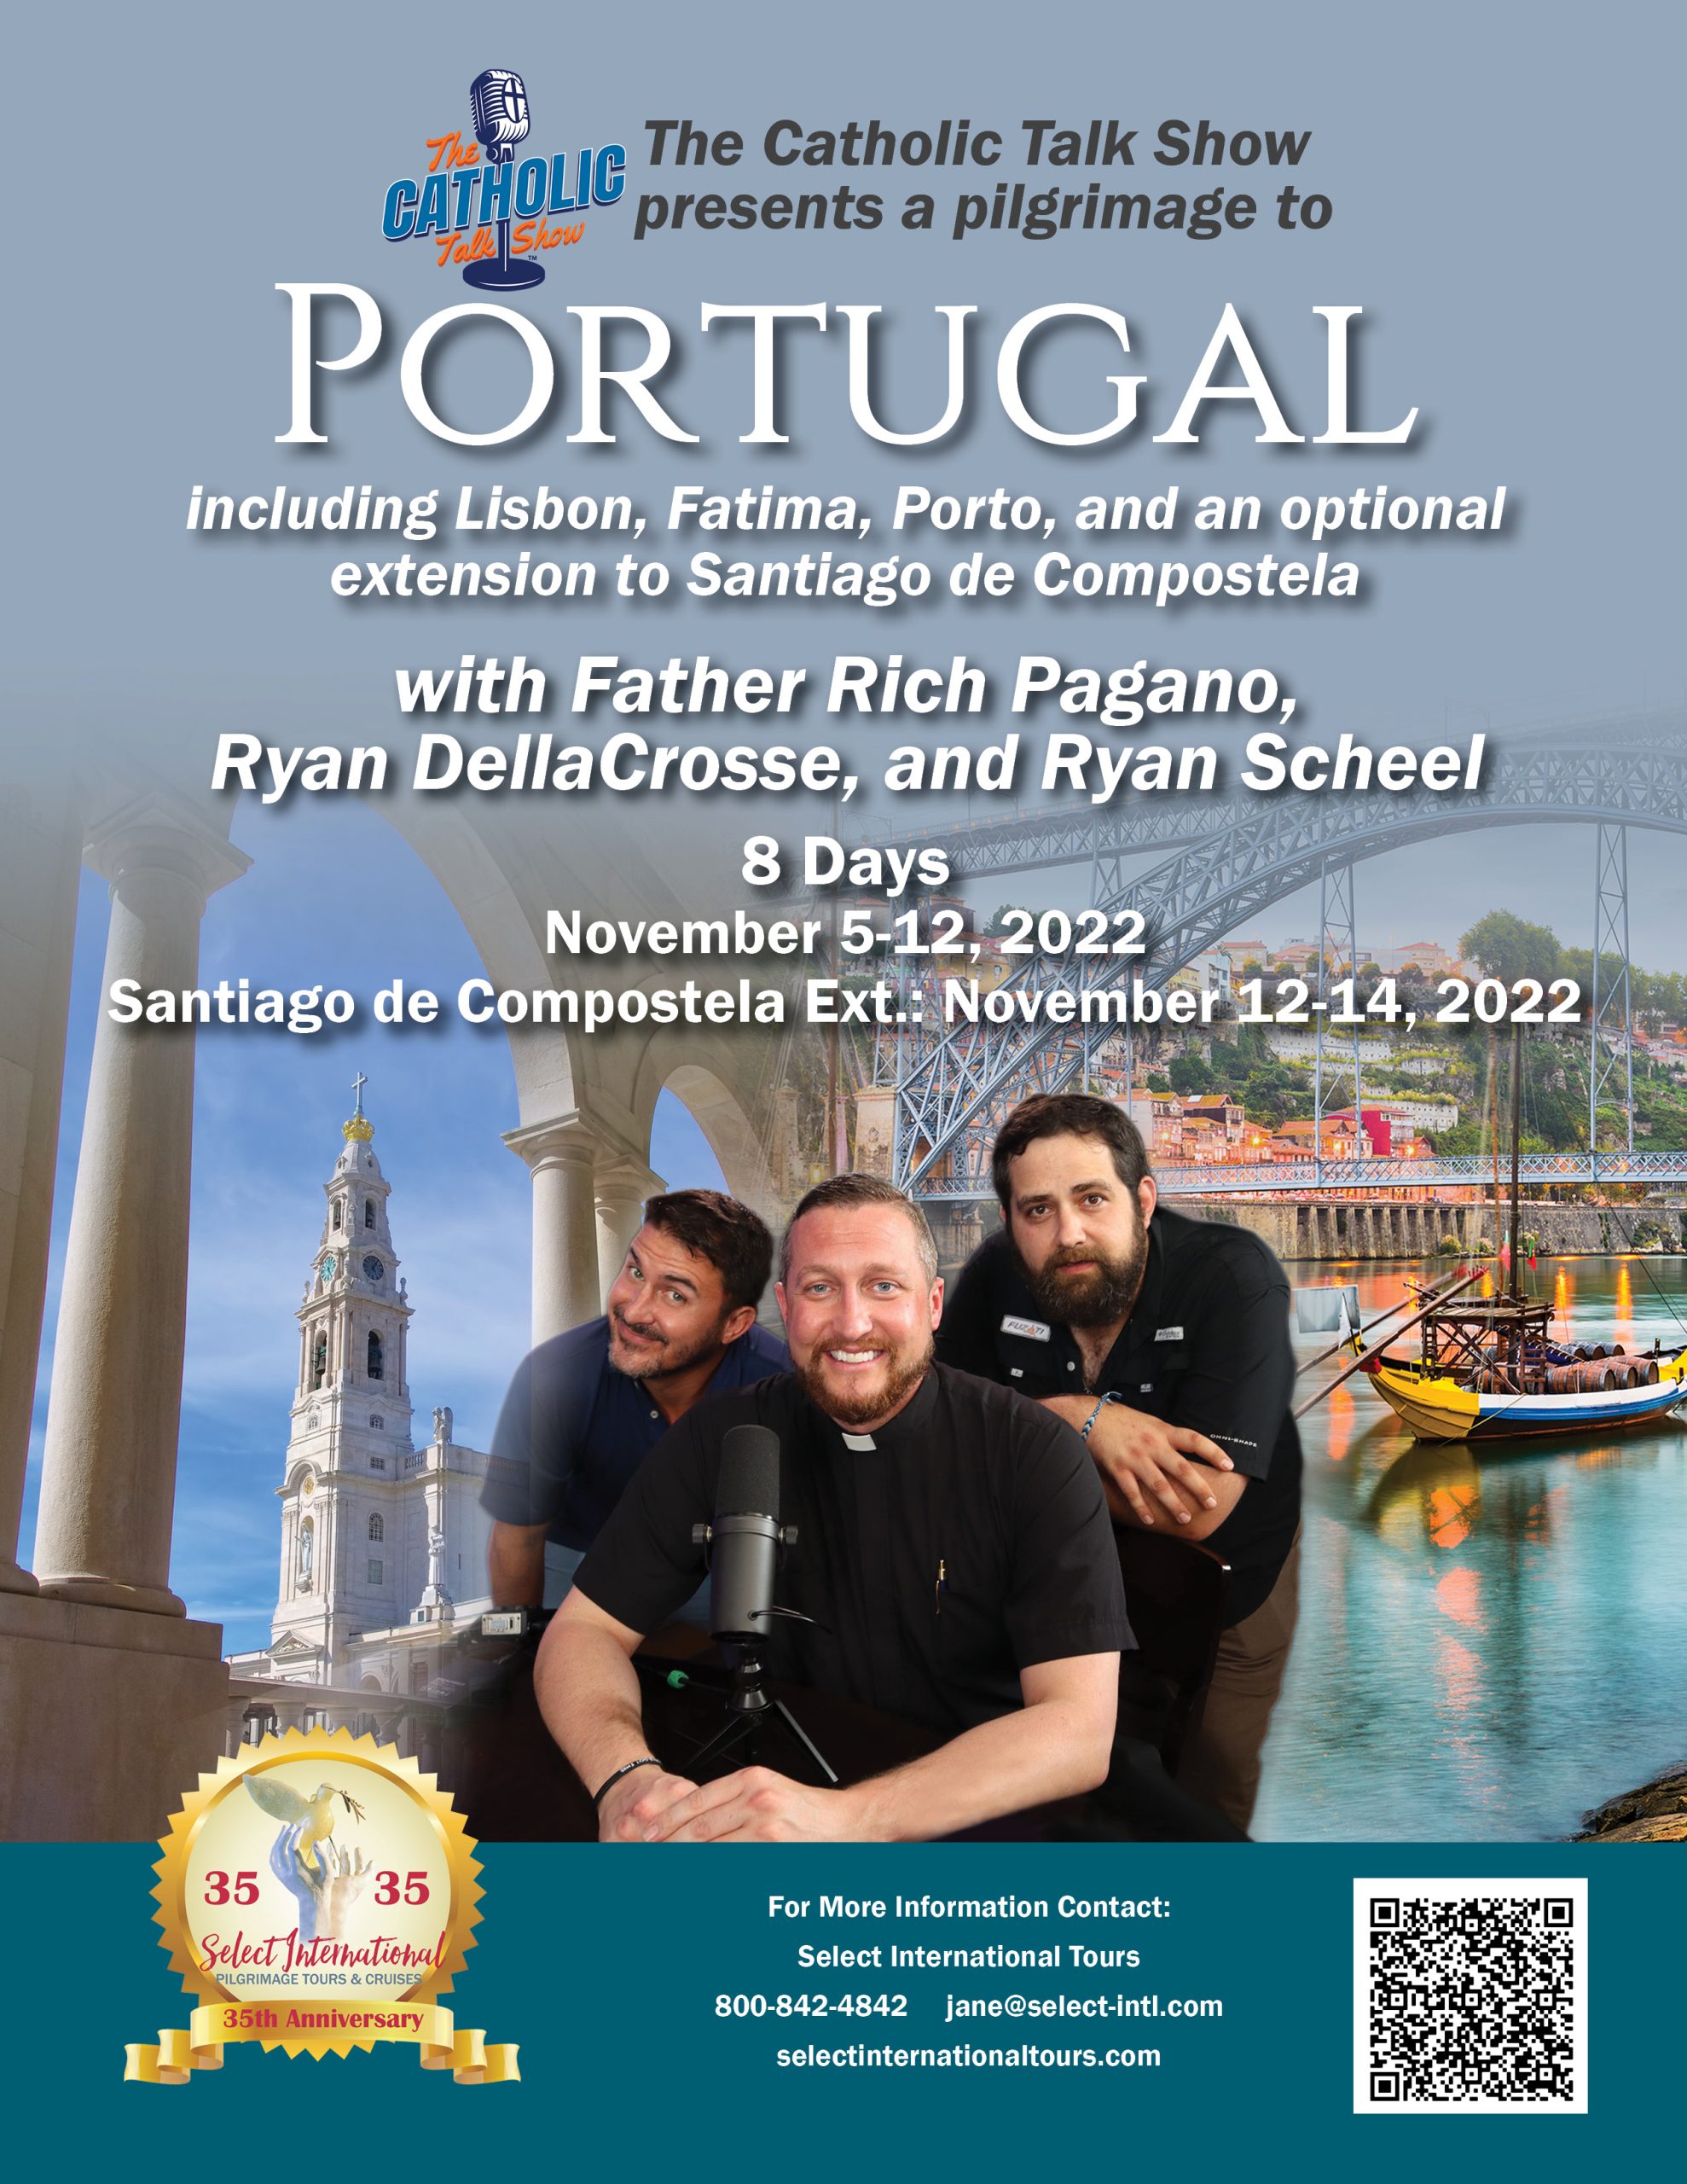 The Catholic Talk Show Pilgrimage to Portugal